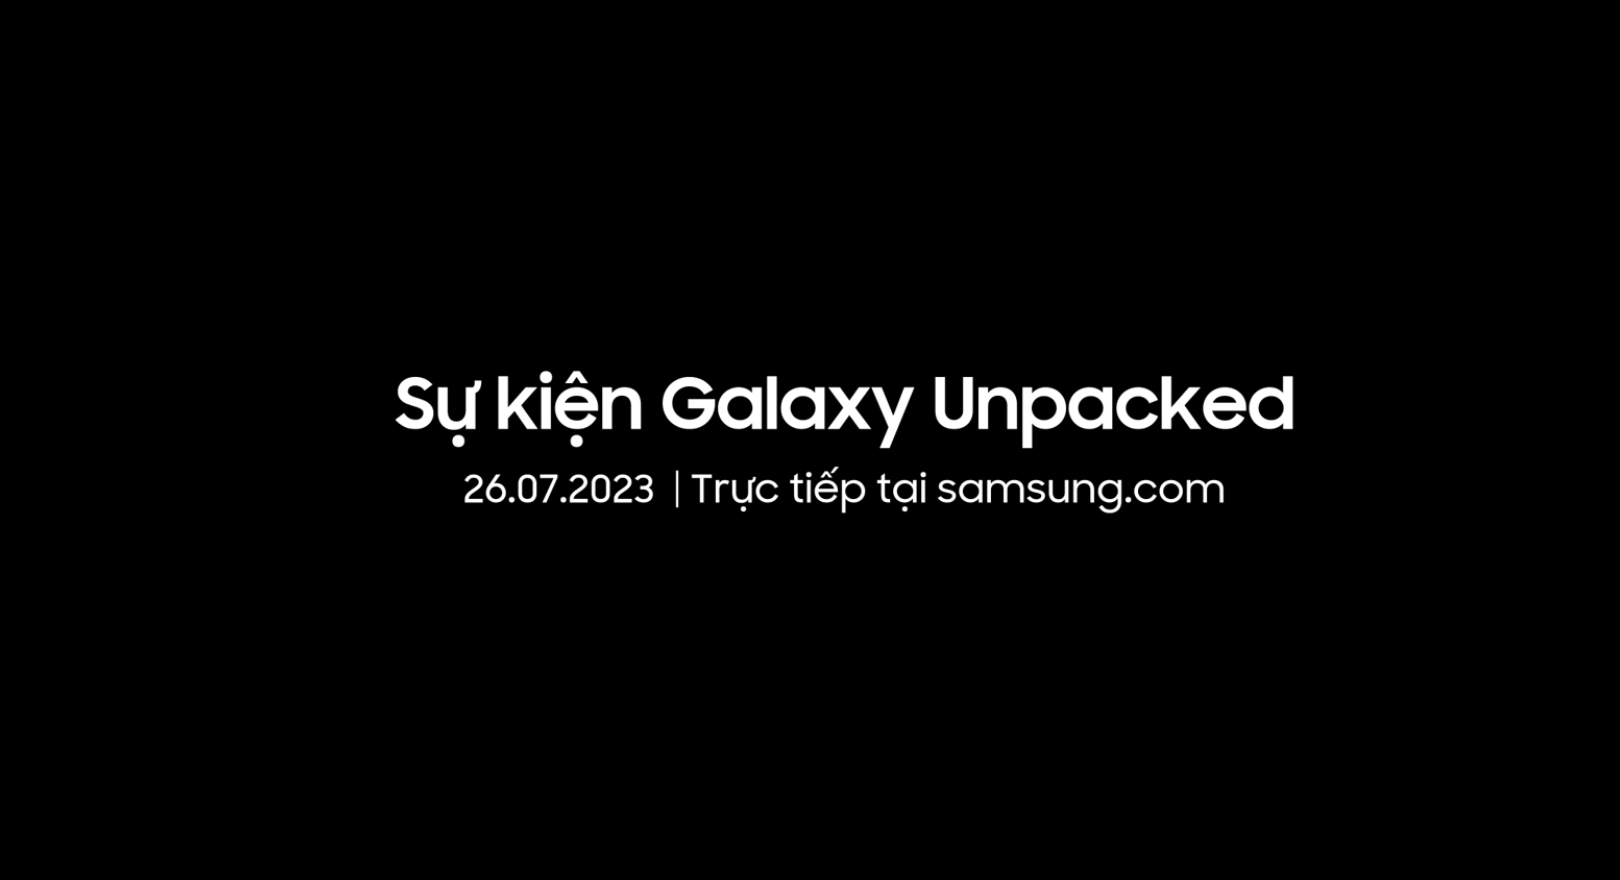 samsung-galaxy-unpacked-2023-1.png (90 KB)